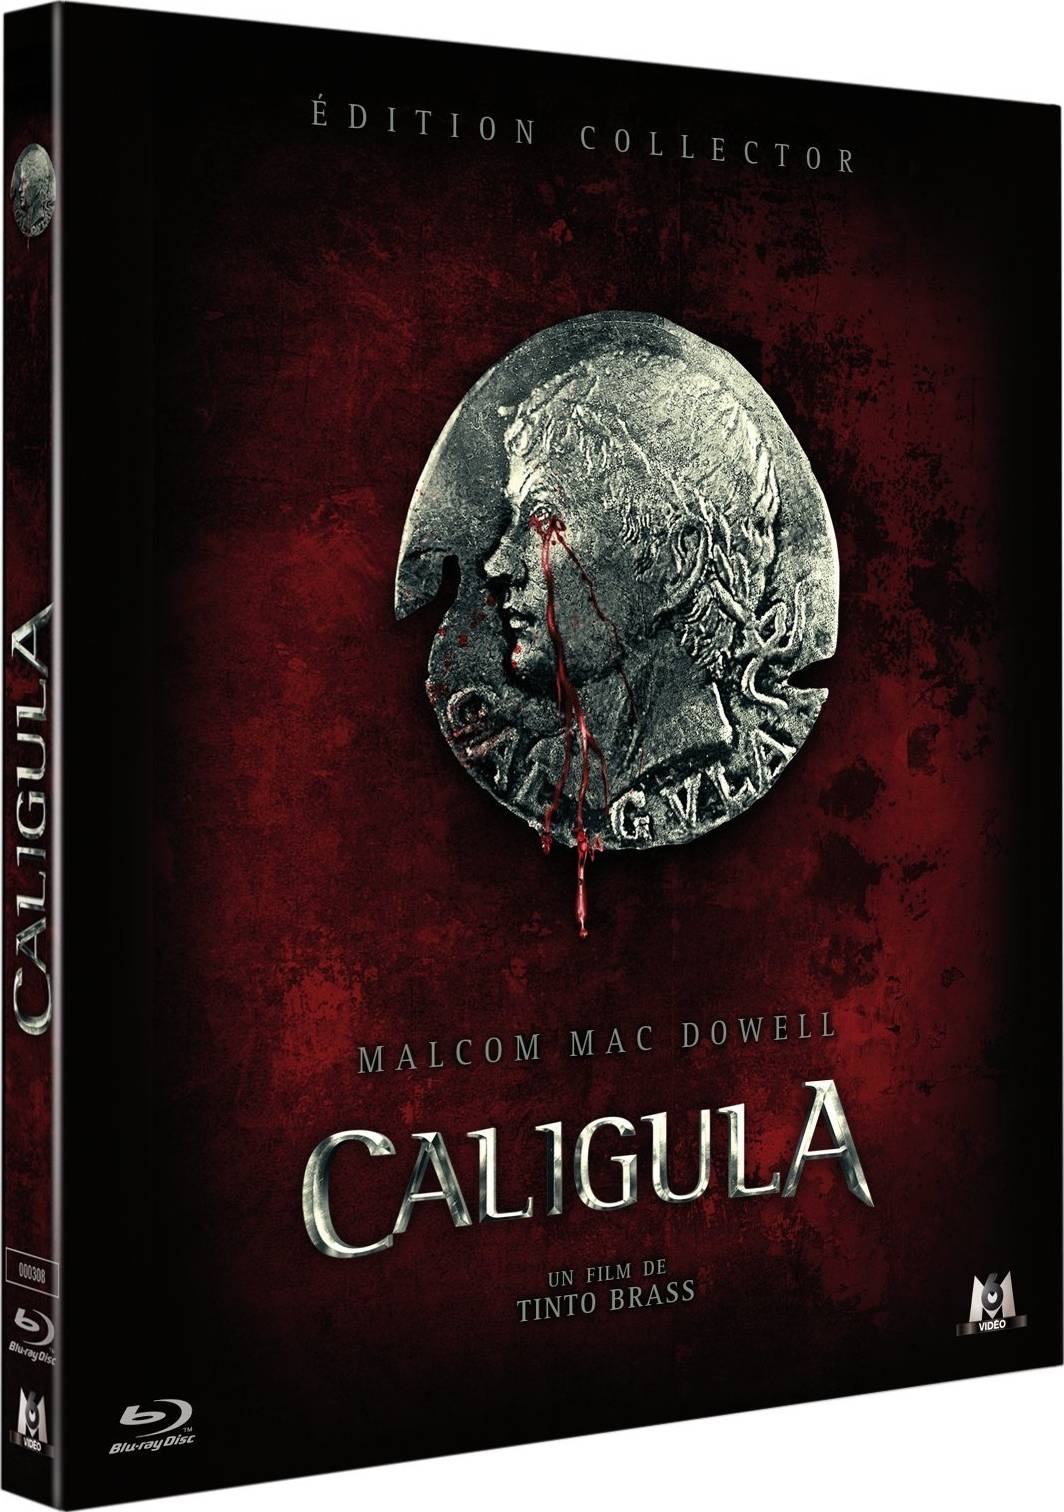 Caligula (1979) Remastered.